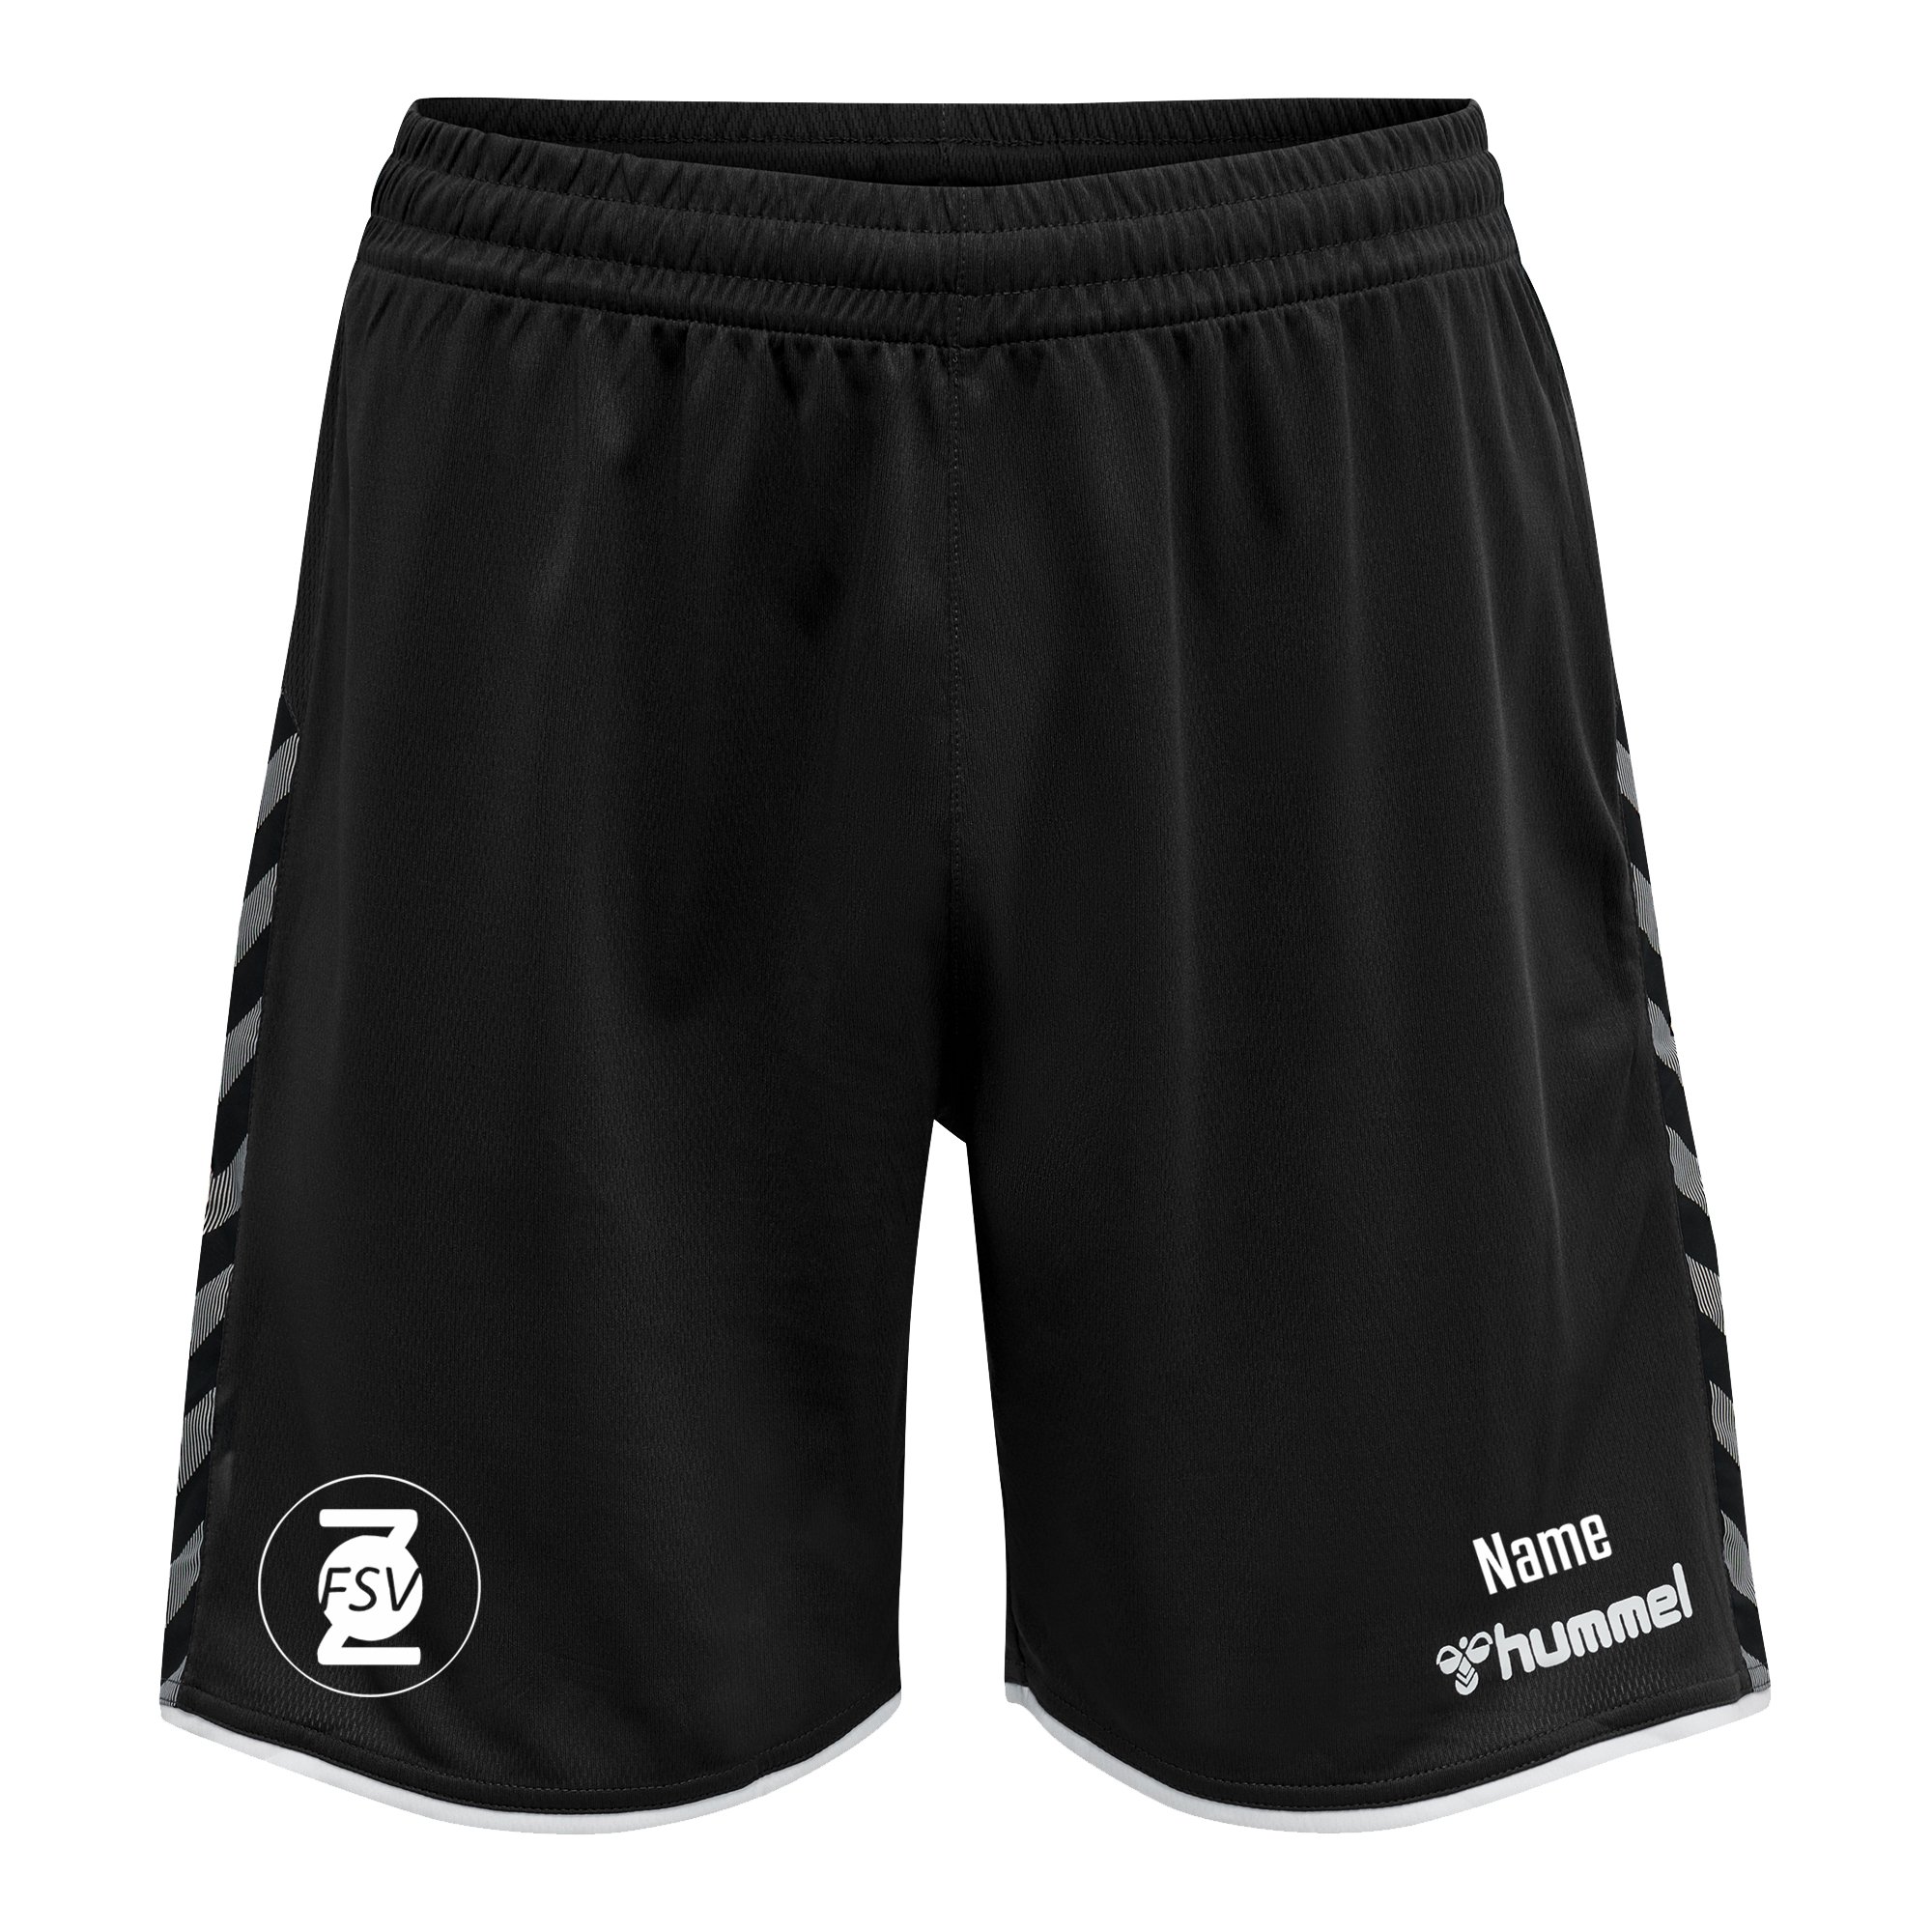 FSV Ziegenrück Shorts